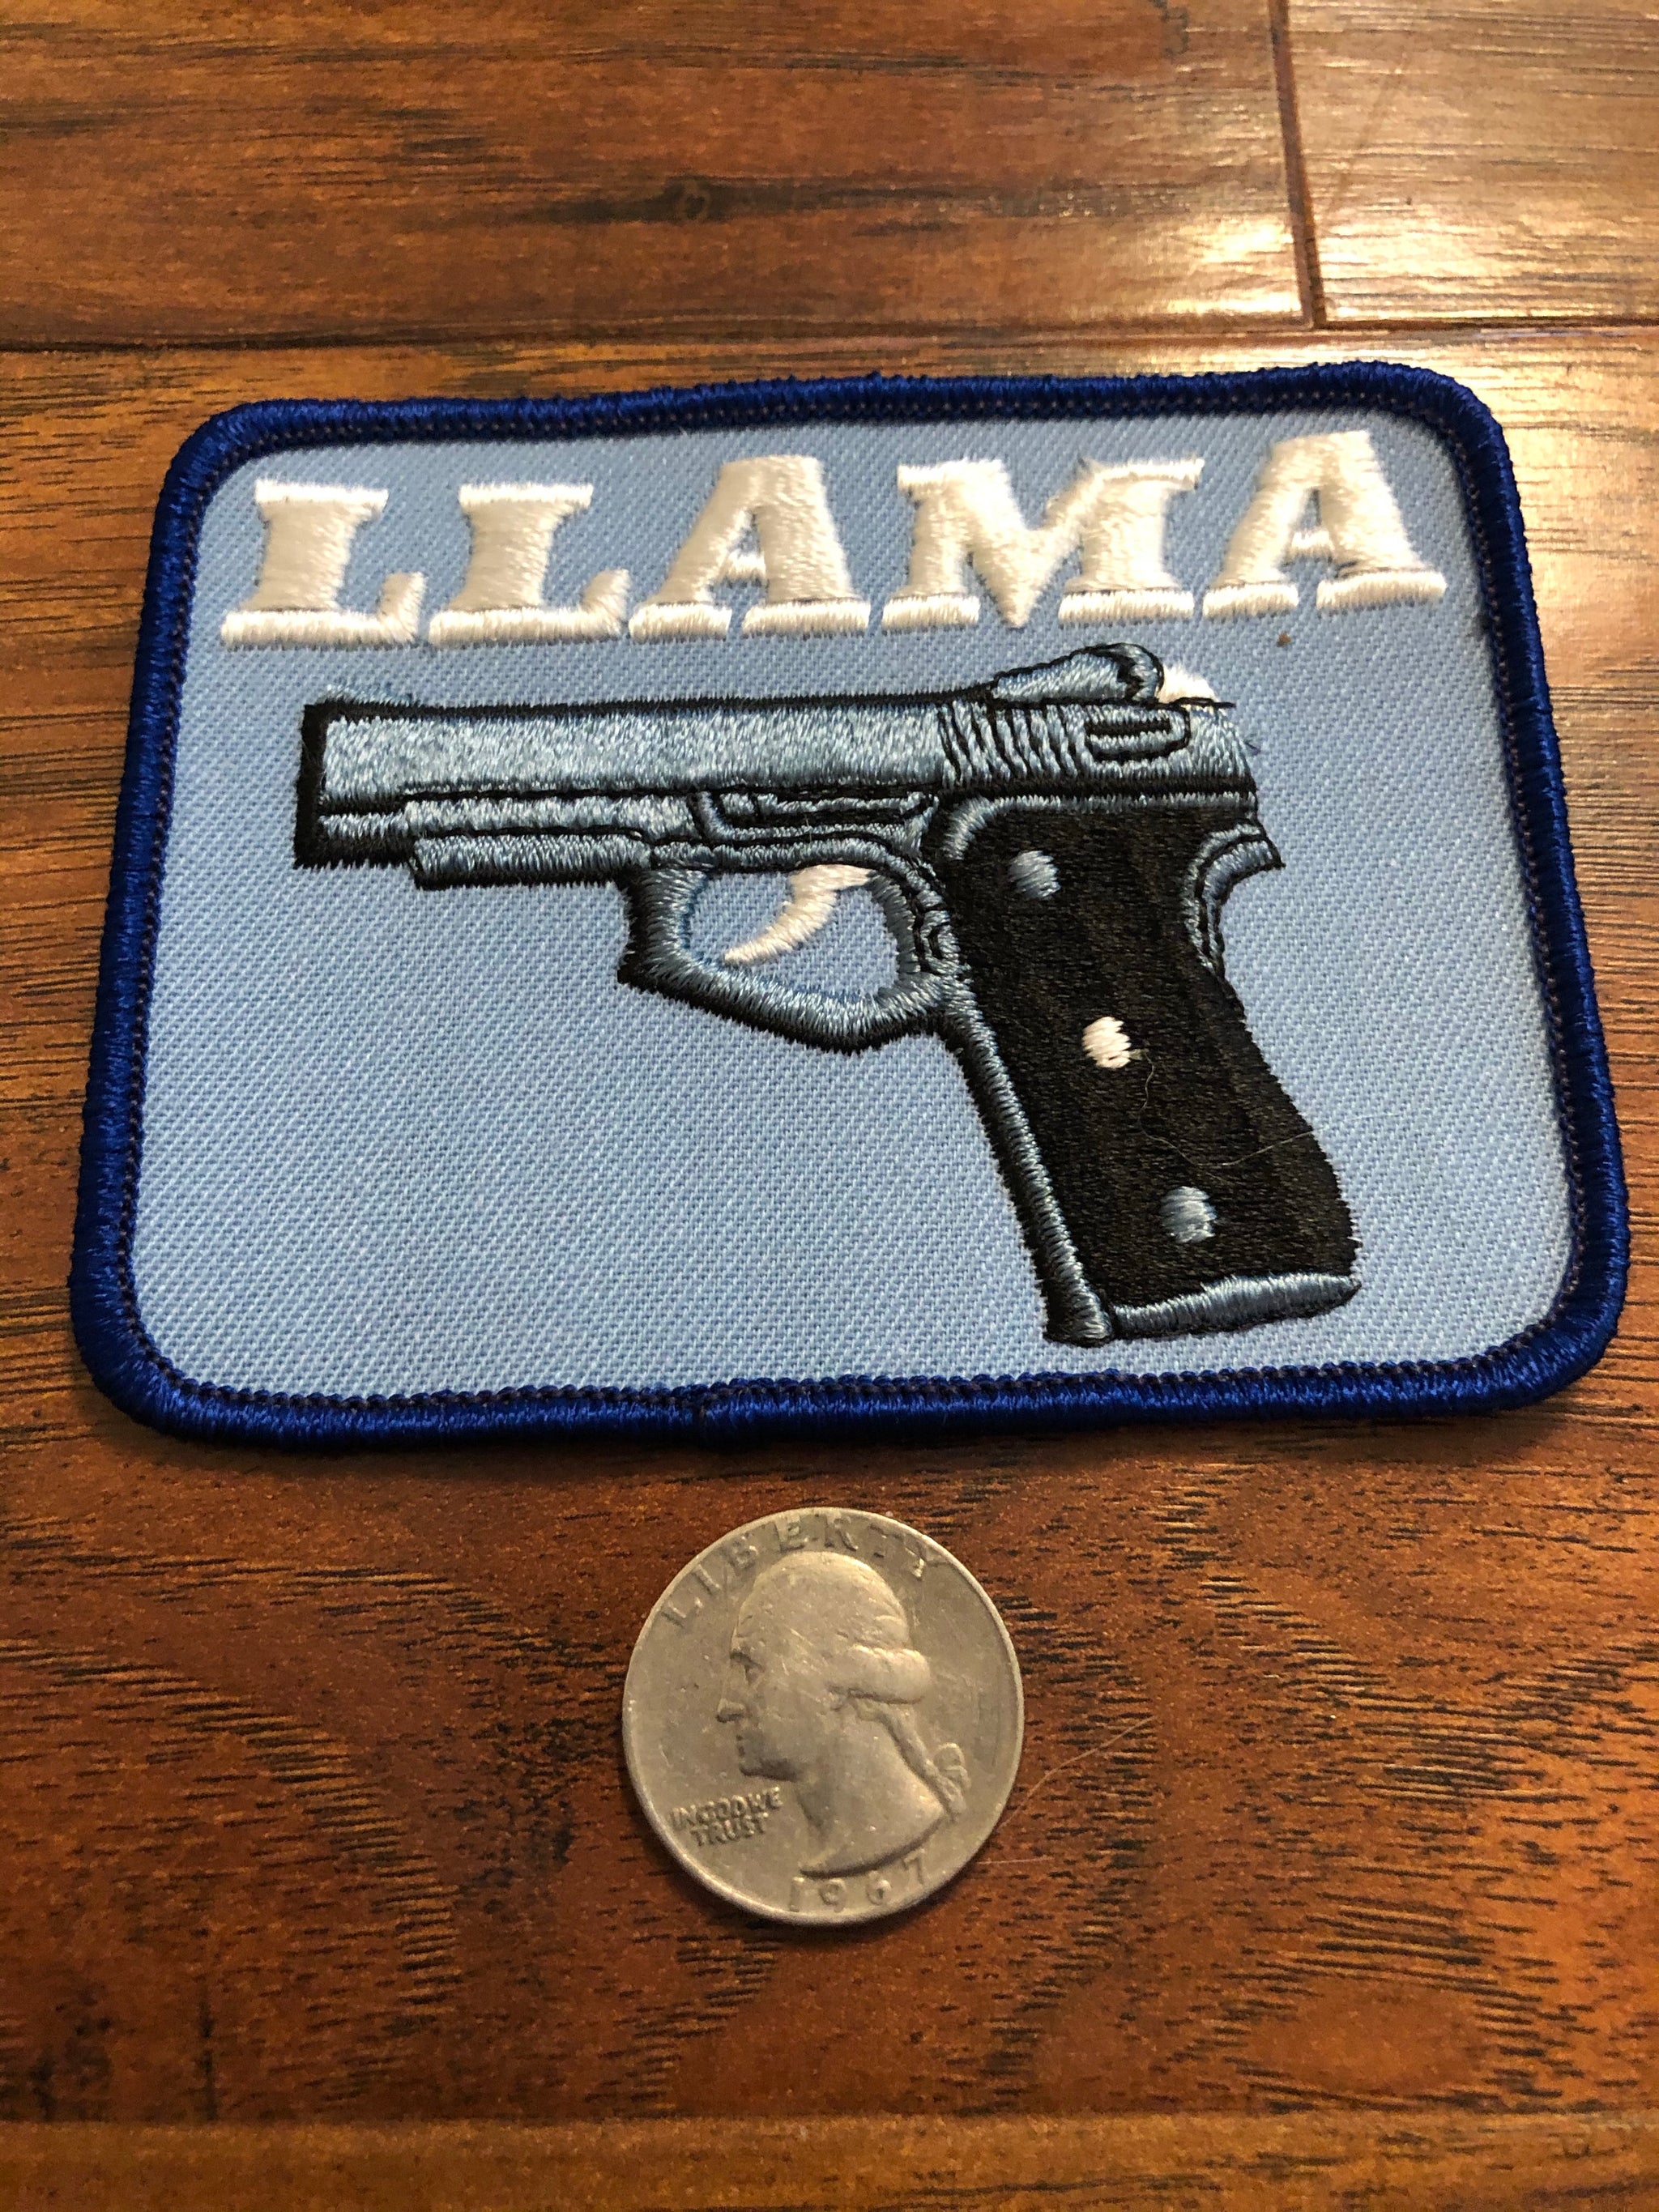 Llama Gear Patch - Large